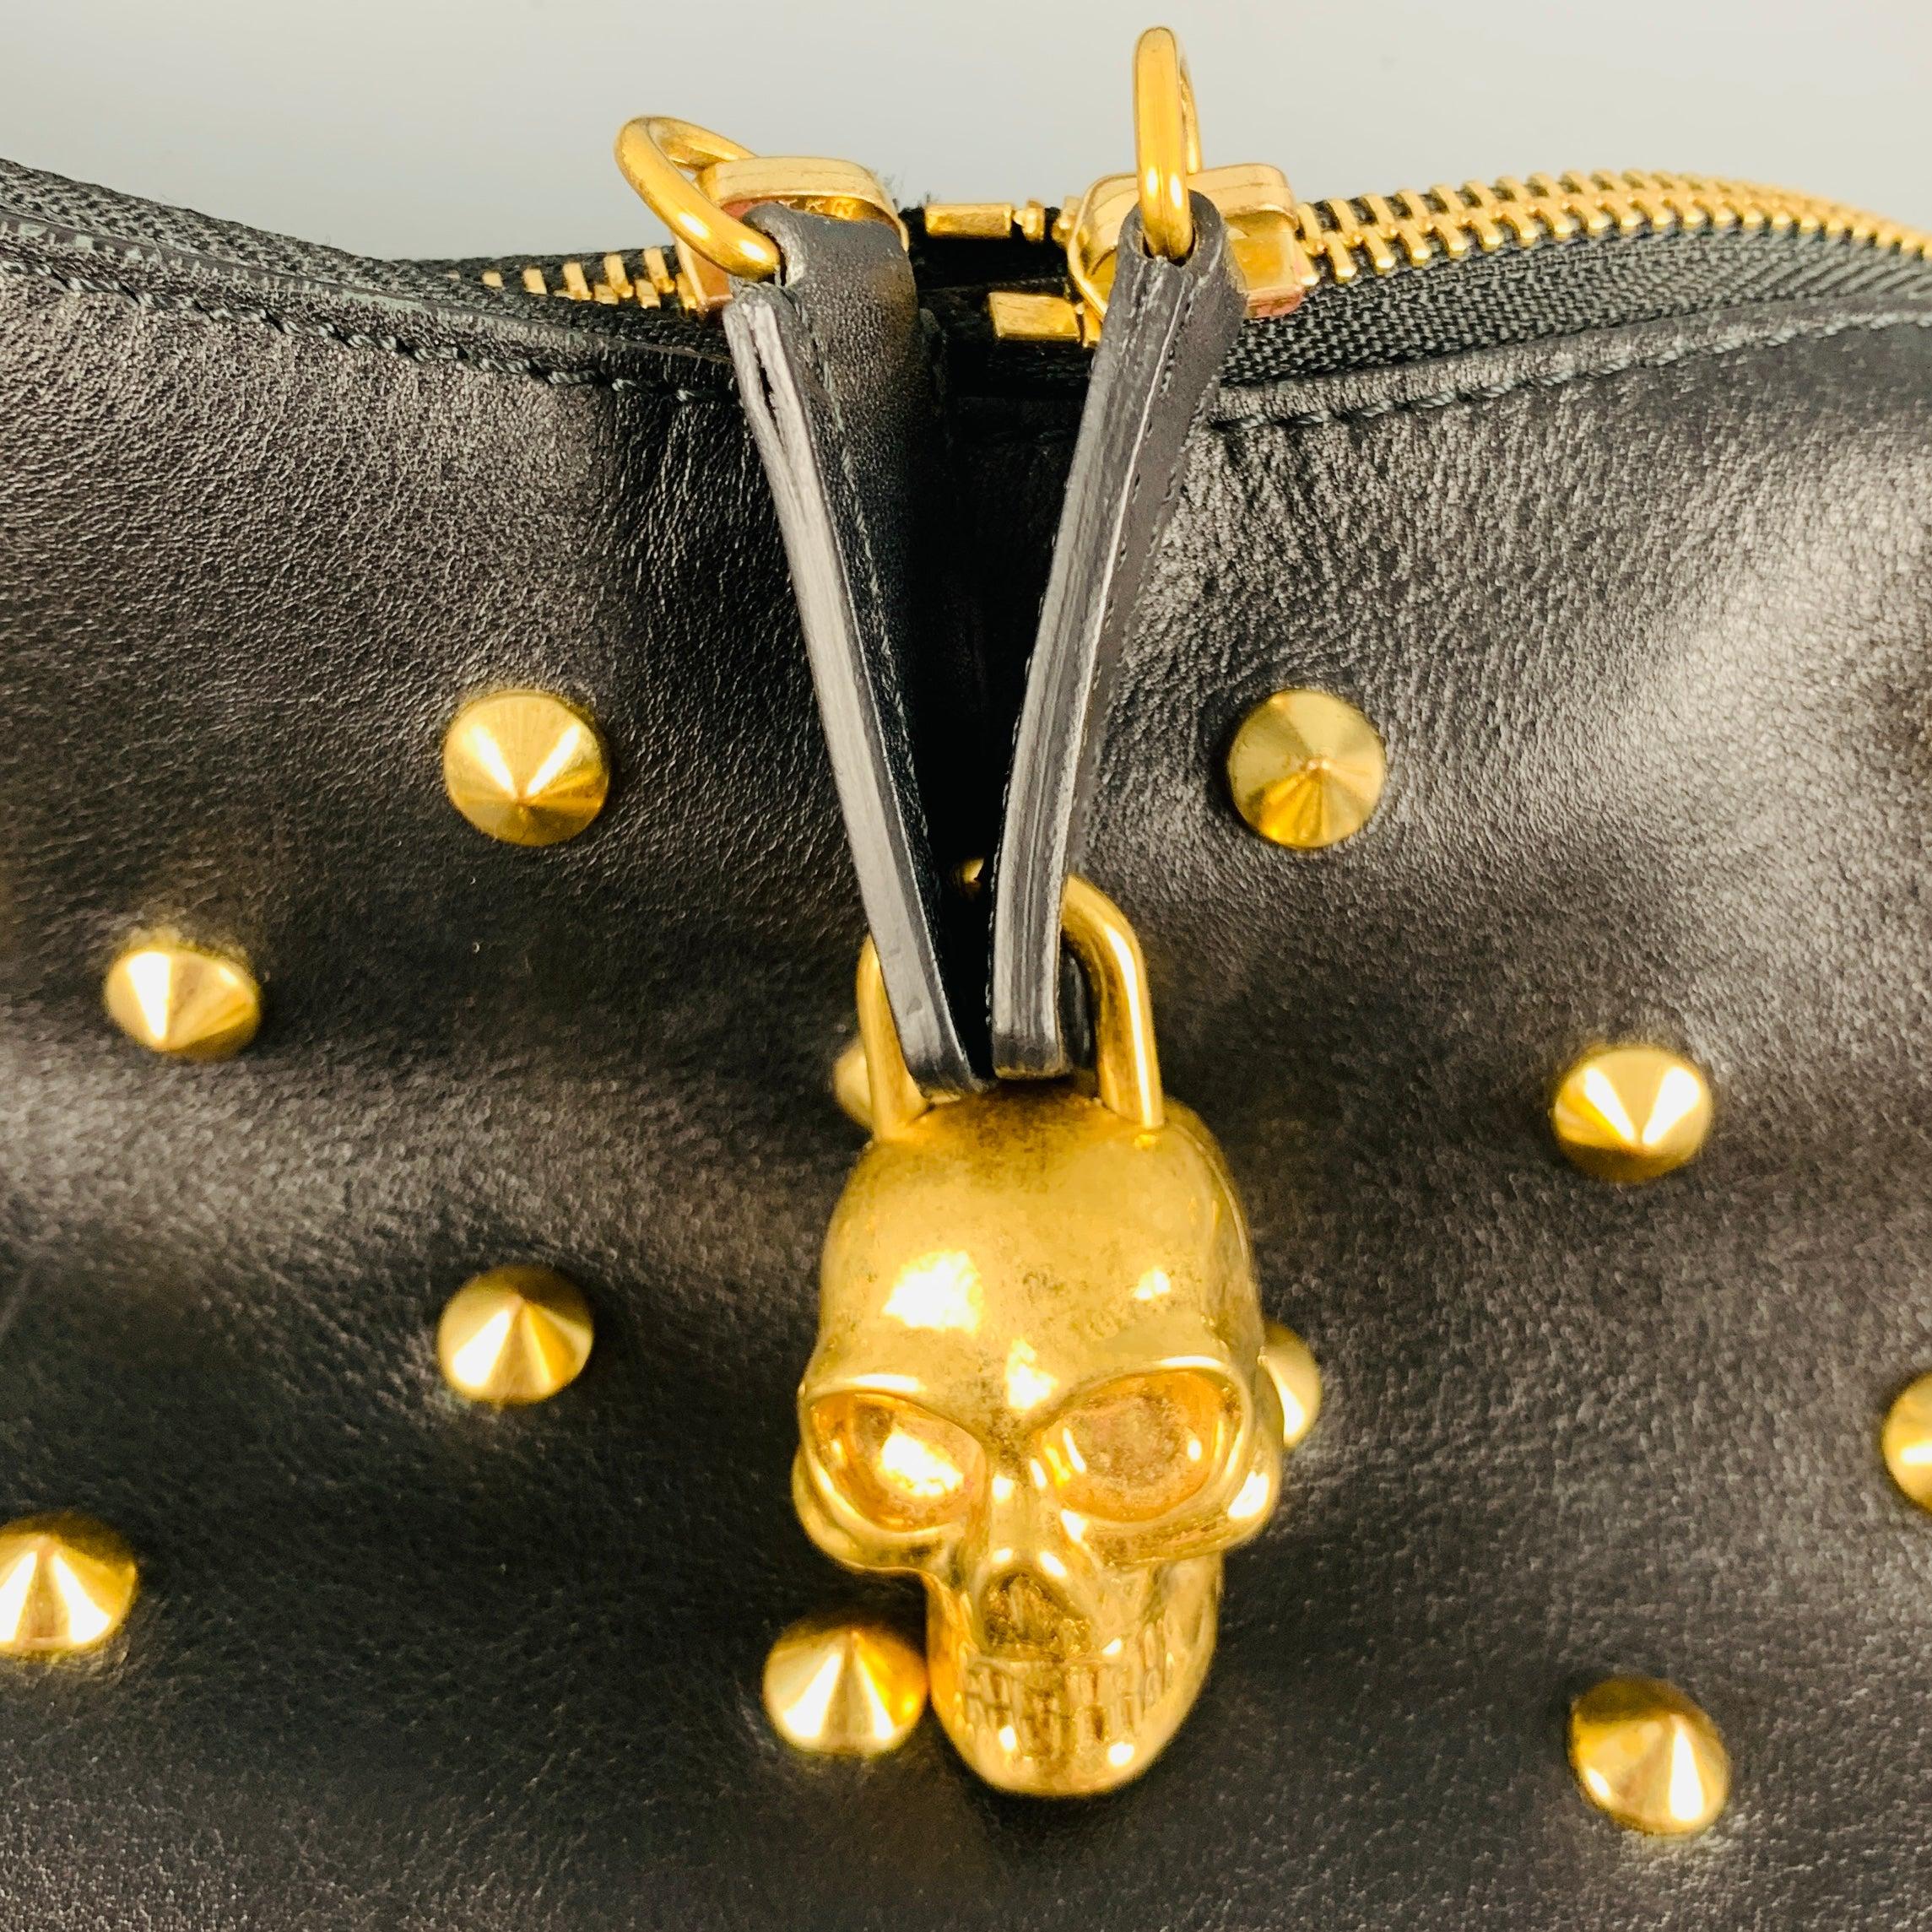 ALEXANDER MCQUEEN Black Gold Studded Leather Hobo Handbag For Sale 4